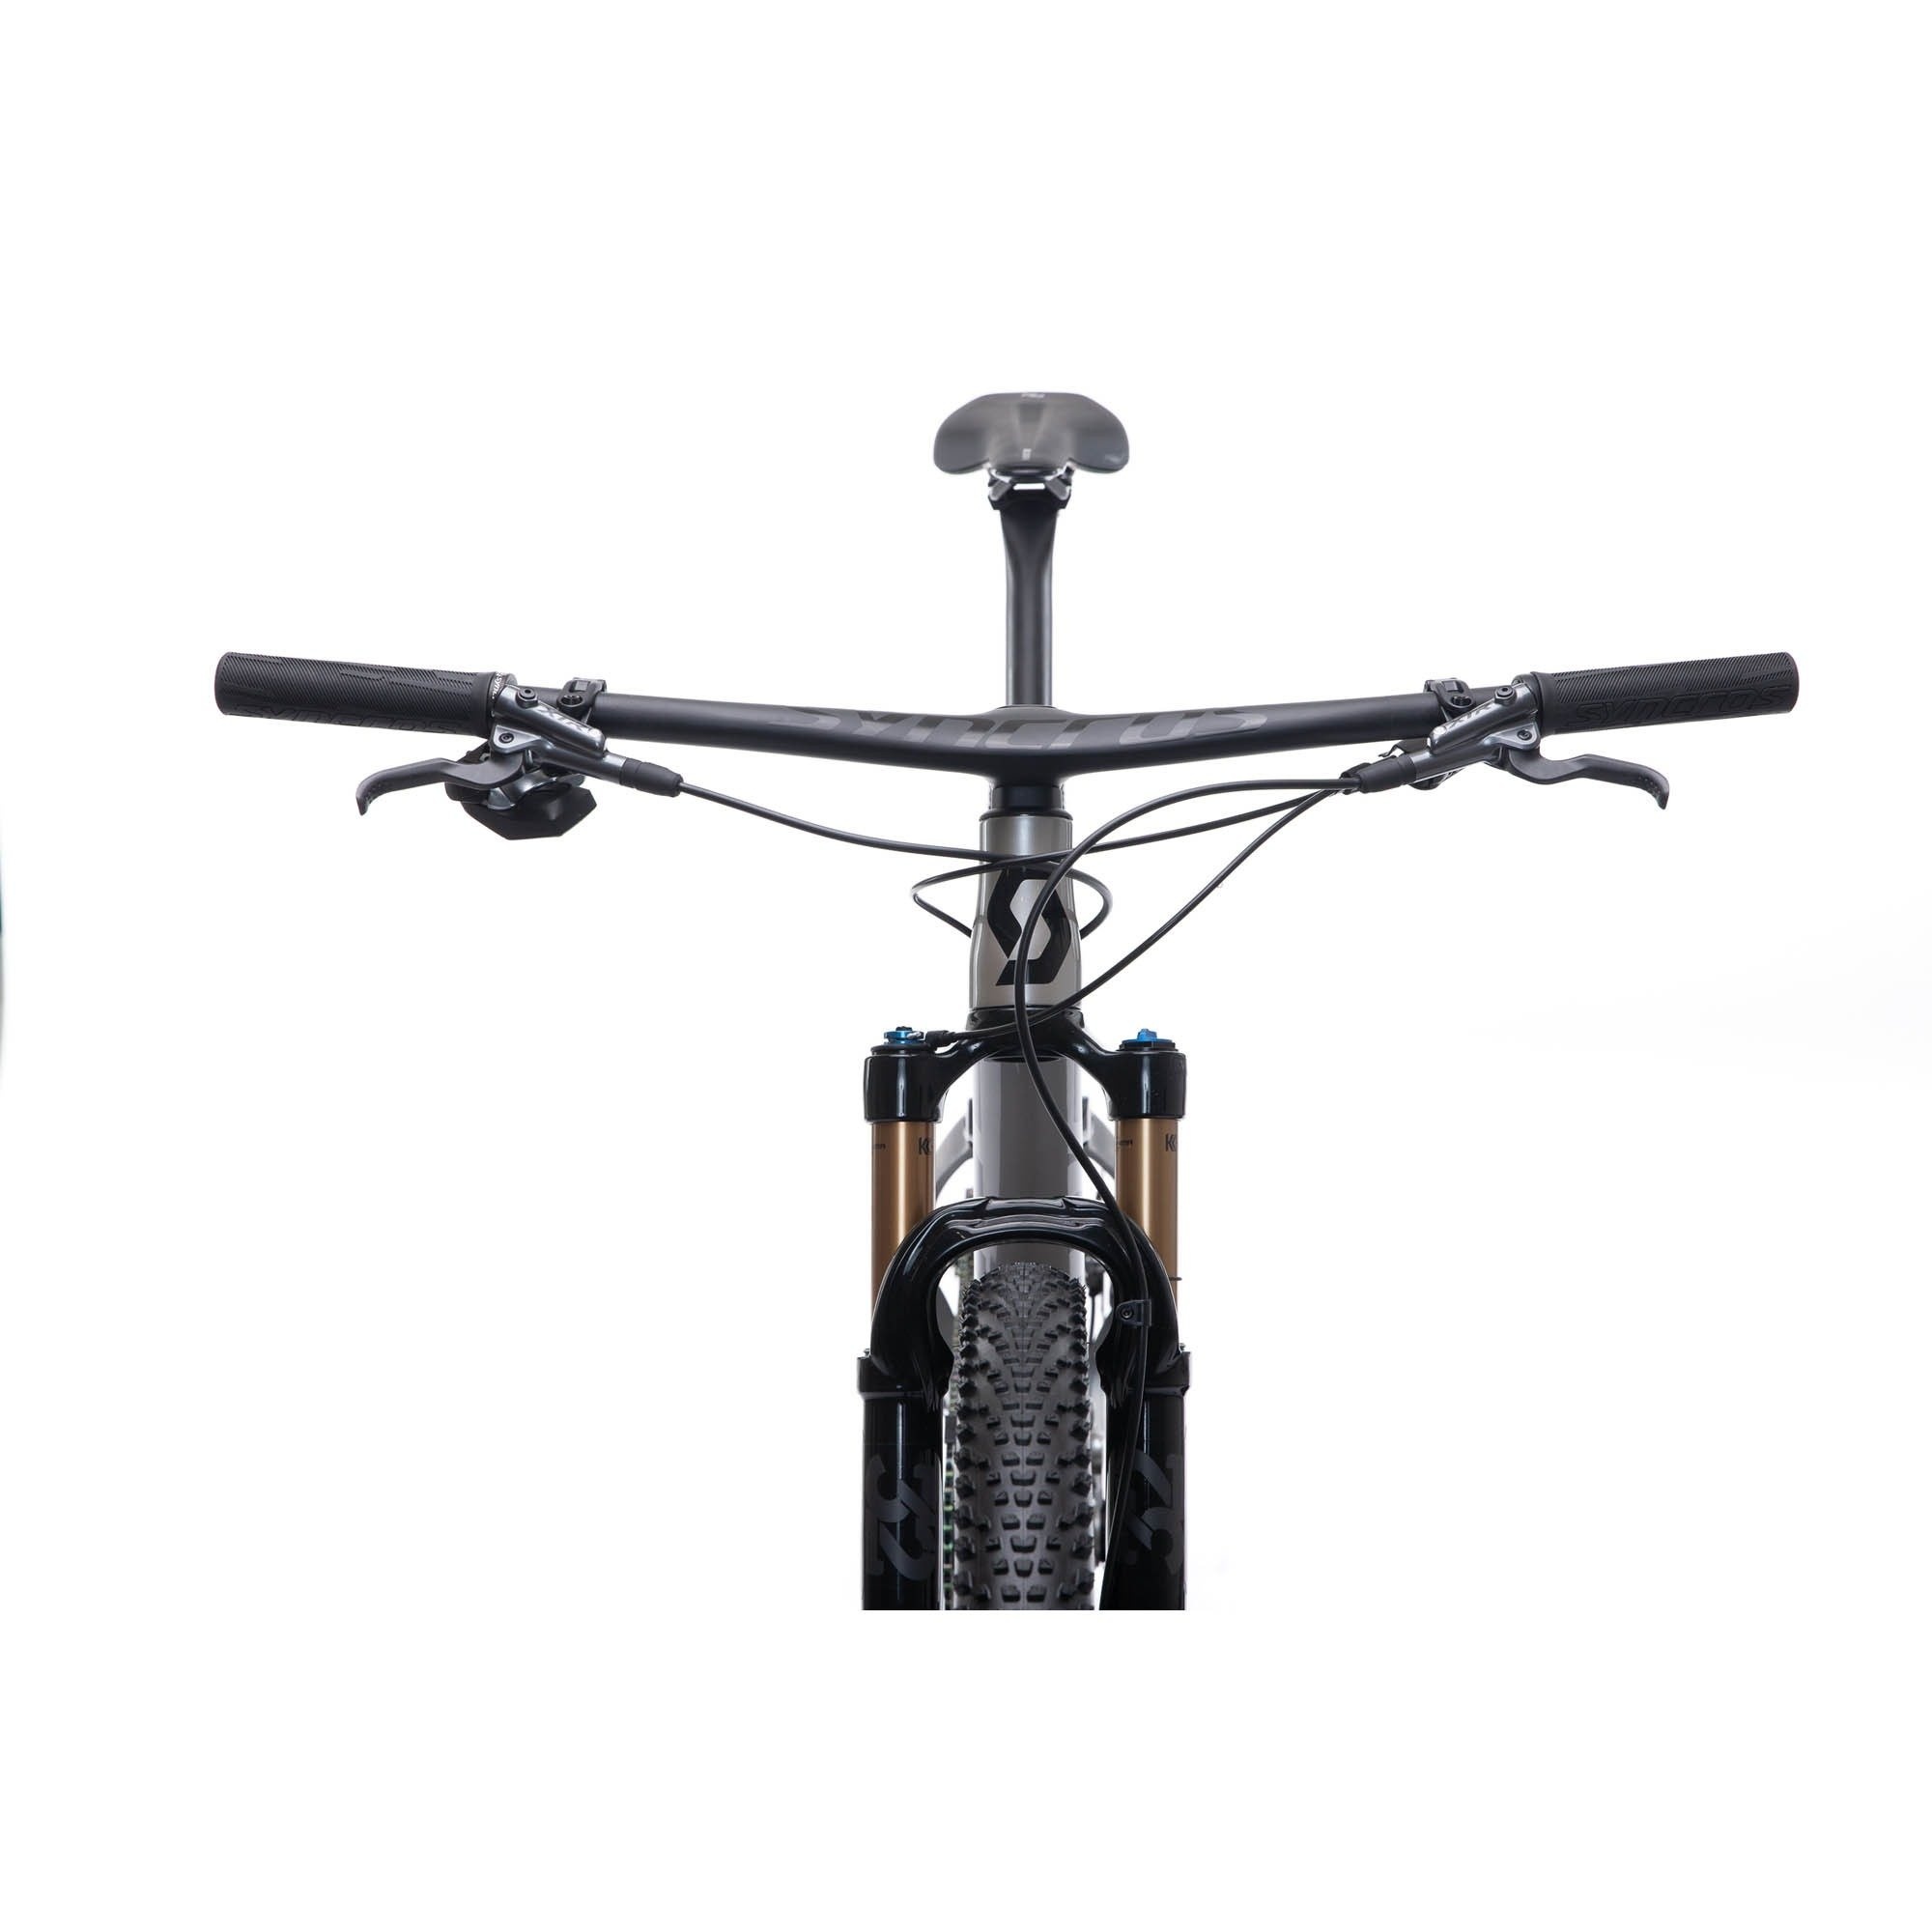 Cykler - Mountainbikes - Scott Spark RC 900 SL AXS 2020 (Udstillingsmodel)